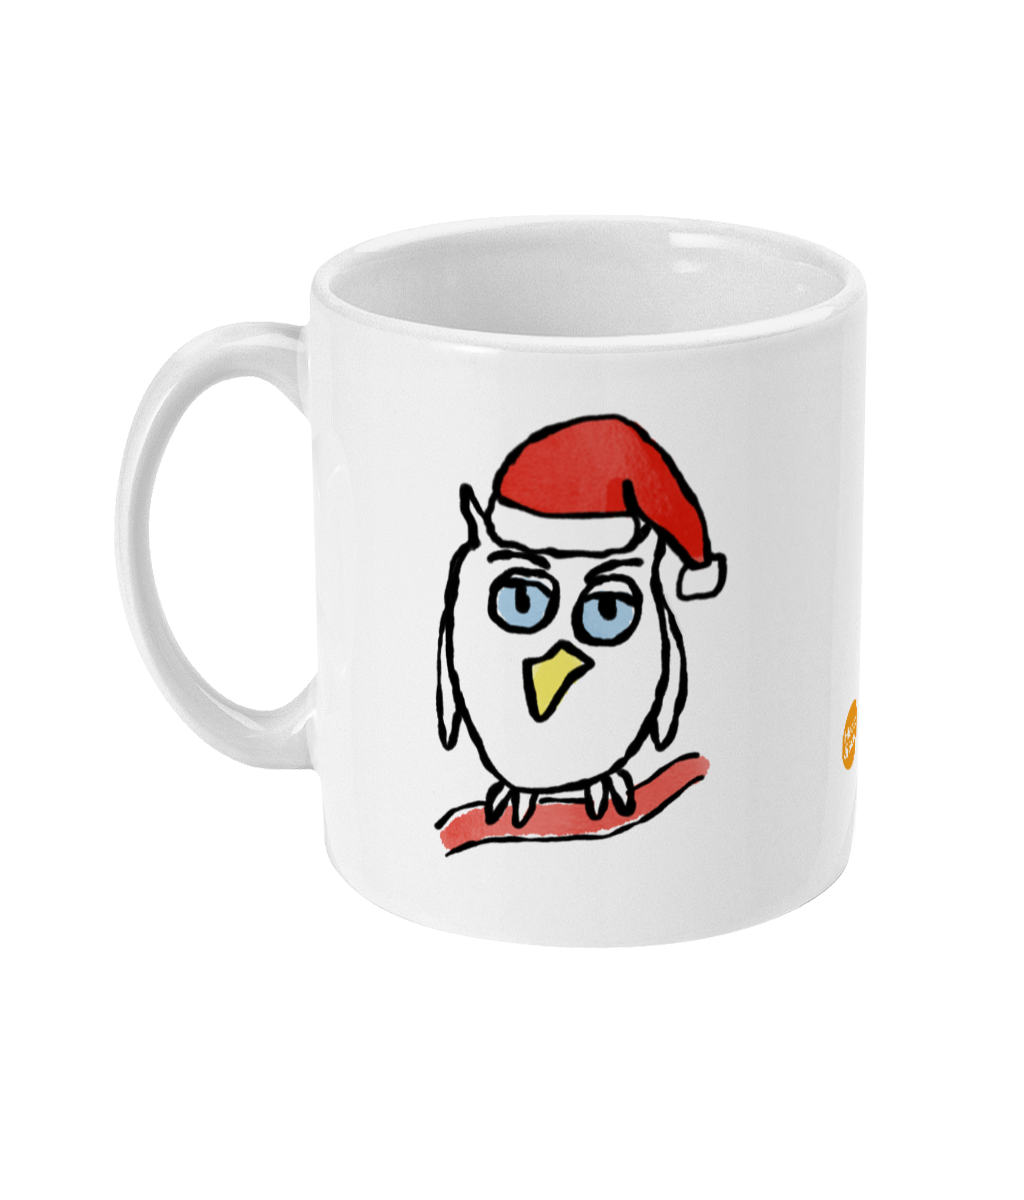 Santa Night Owl Mug - Cute Santa Owl illustrated coffee mug by Hector and Bone Left View